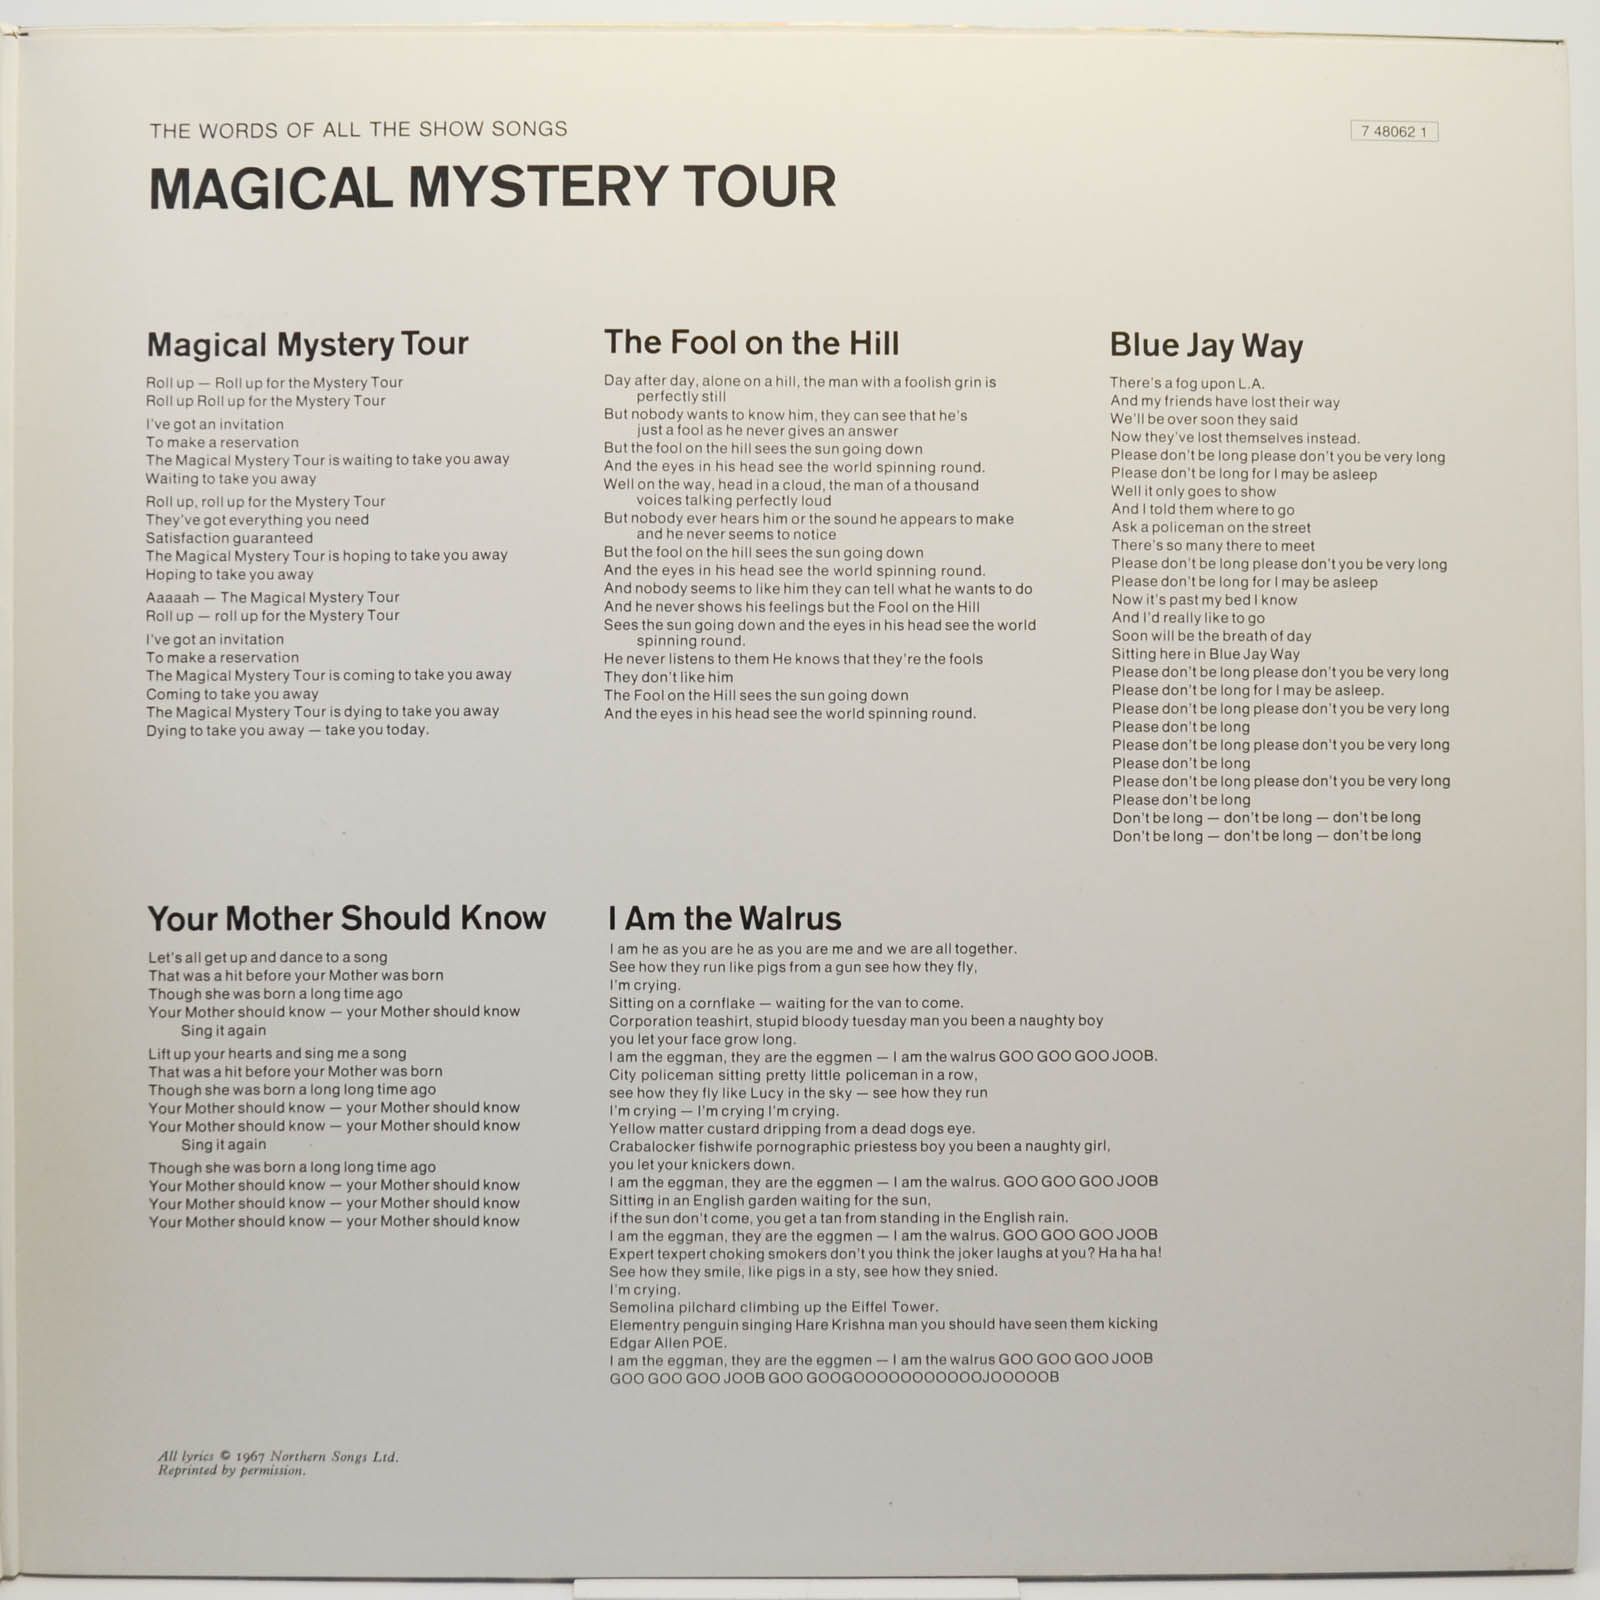 Beatles — Magical Mystery Tour, 1967